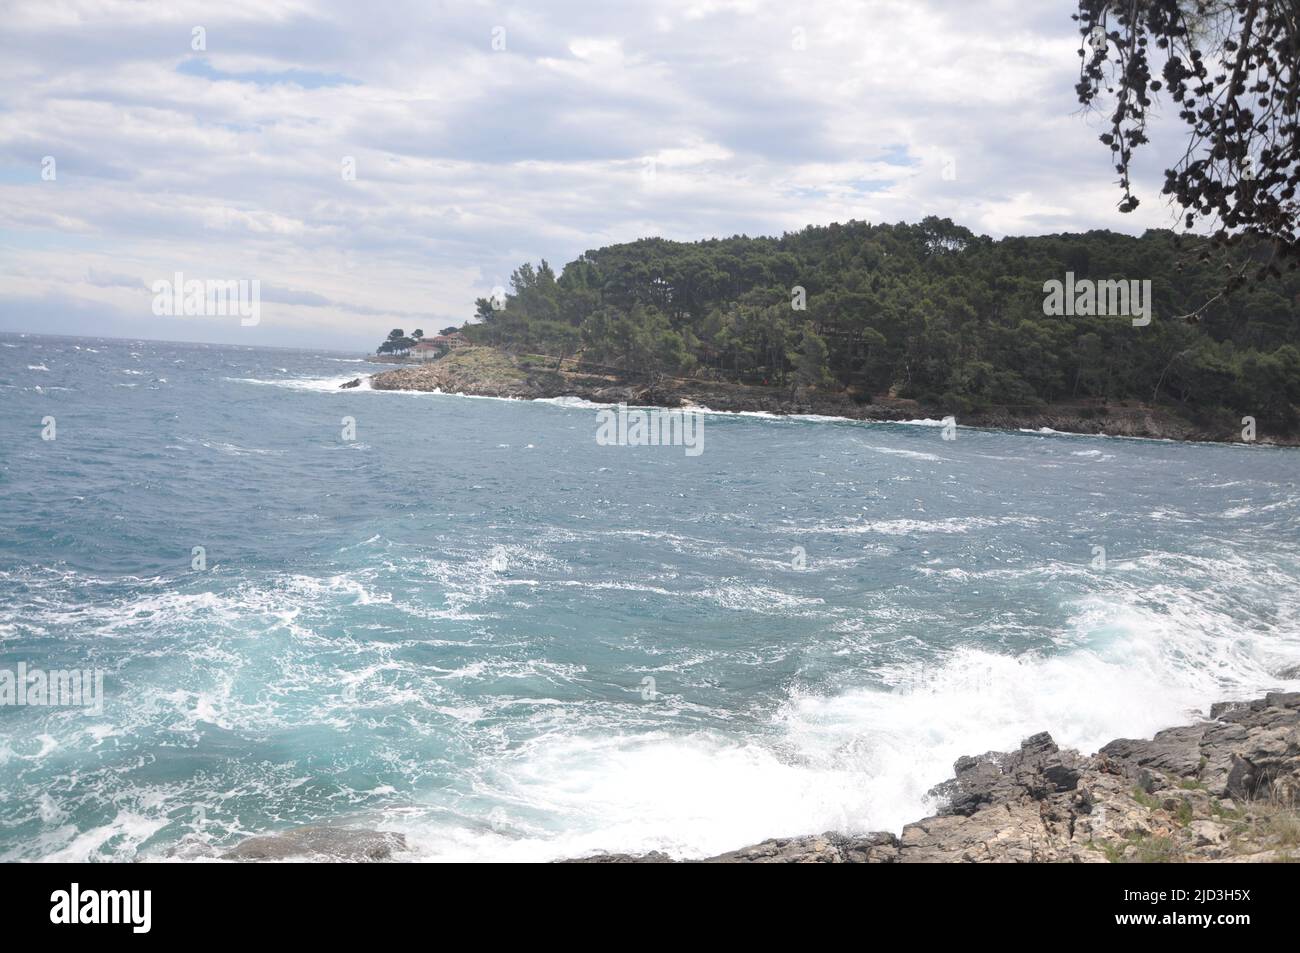 Landscape view of adriatic sea and stormy waves splashing on the coast. Beautiful amazing stunning seascape, waves crashing on rocks during a storm, I Stock Photo